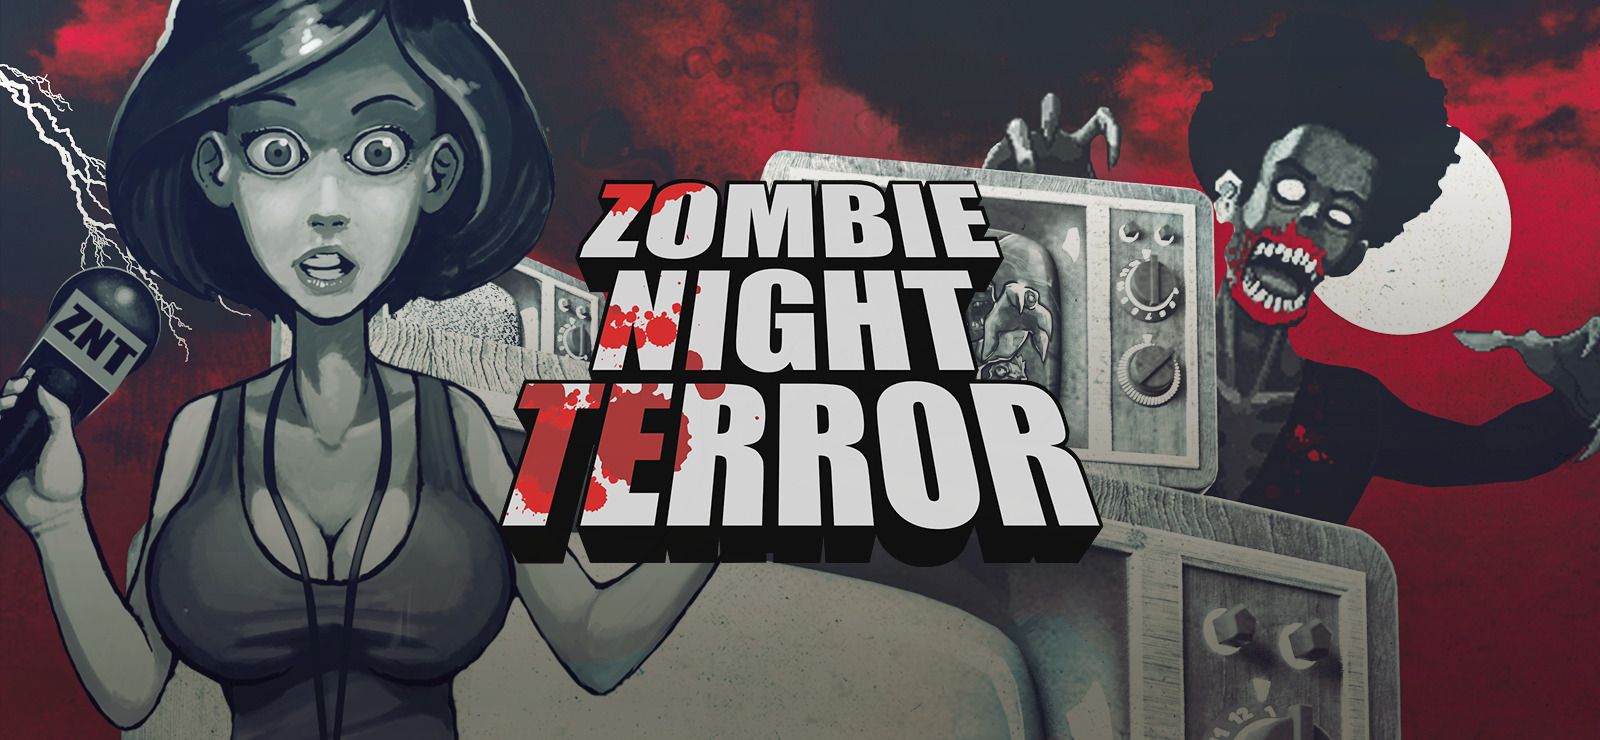 zombie night terror.